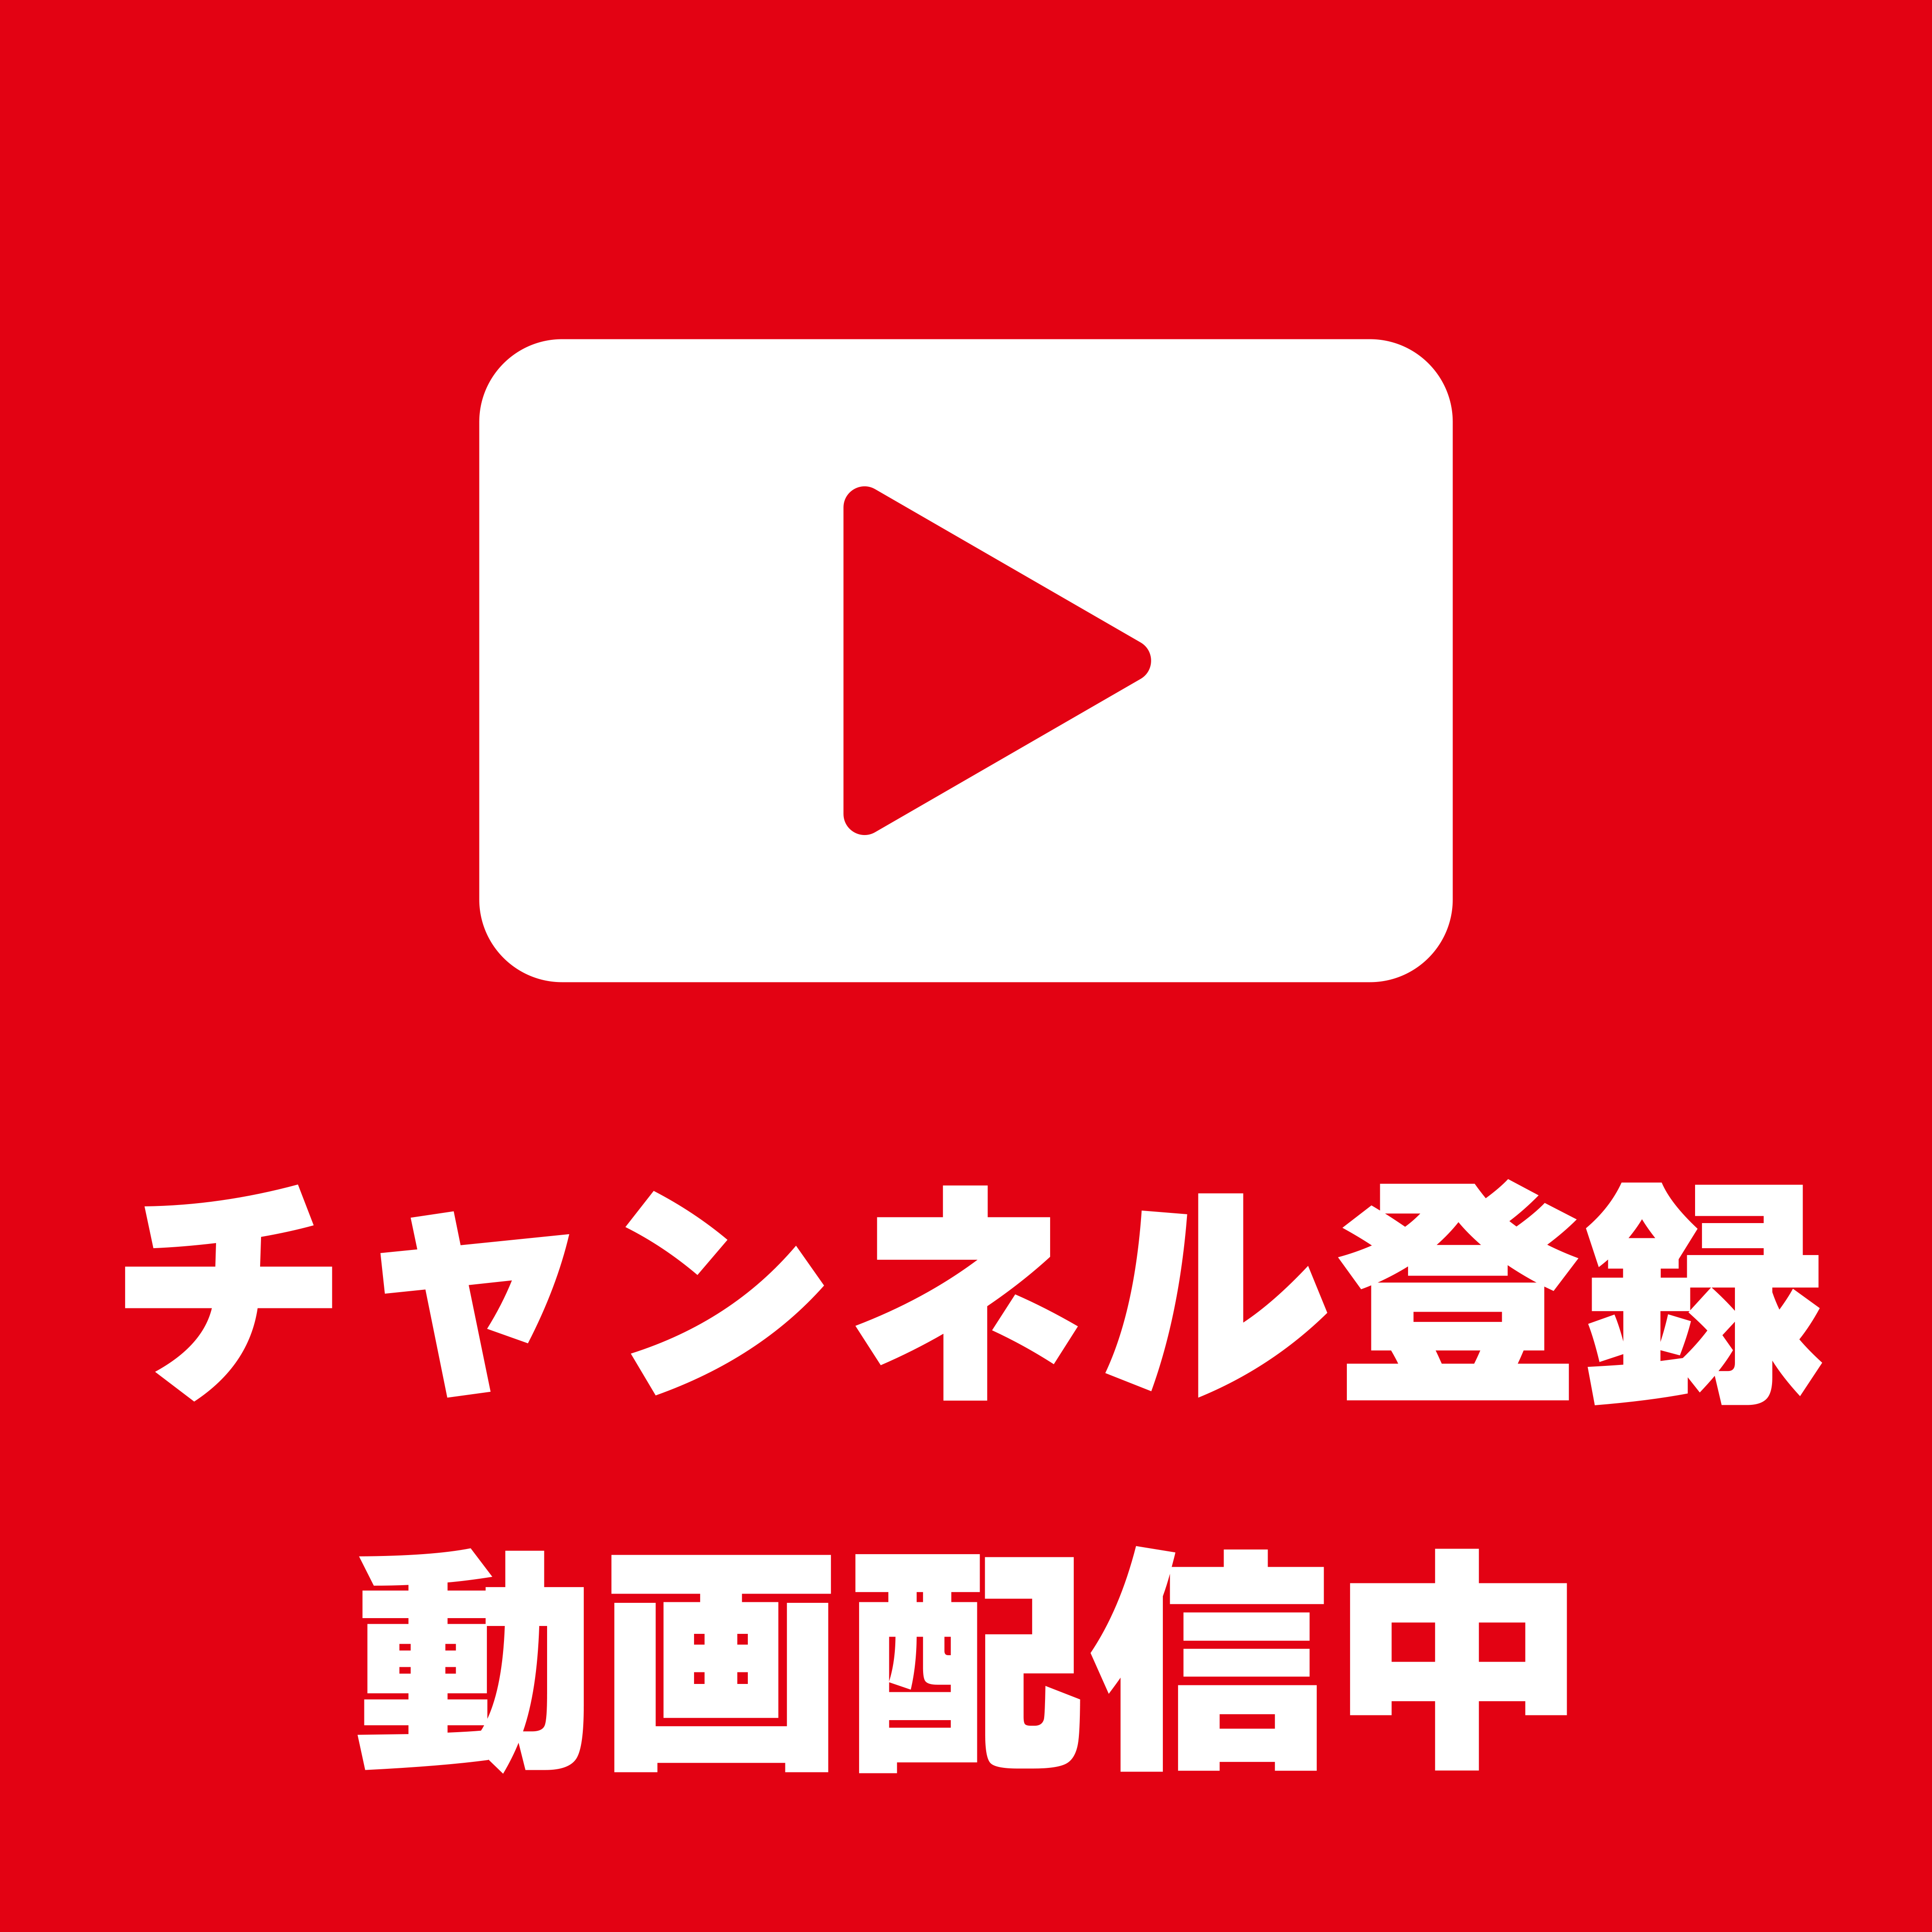 youtube_logo_1024